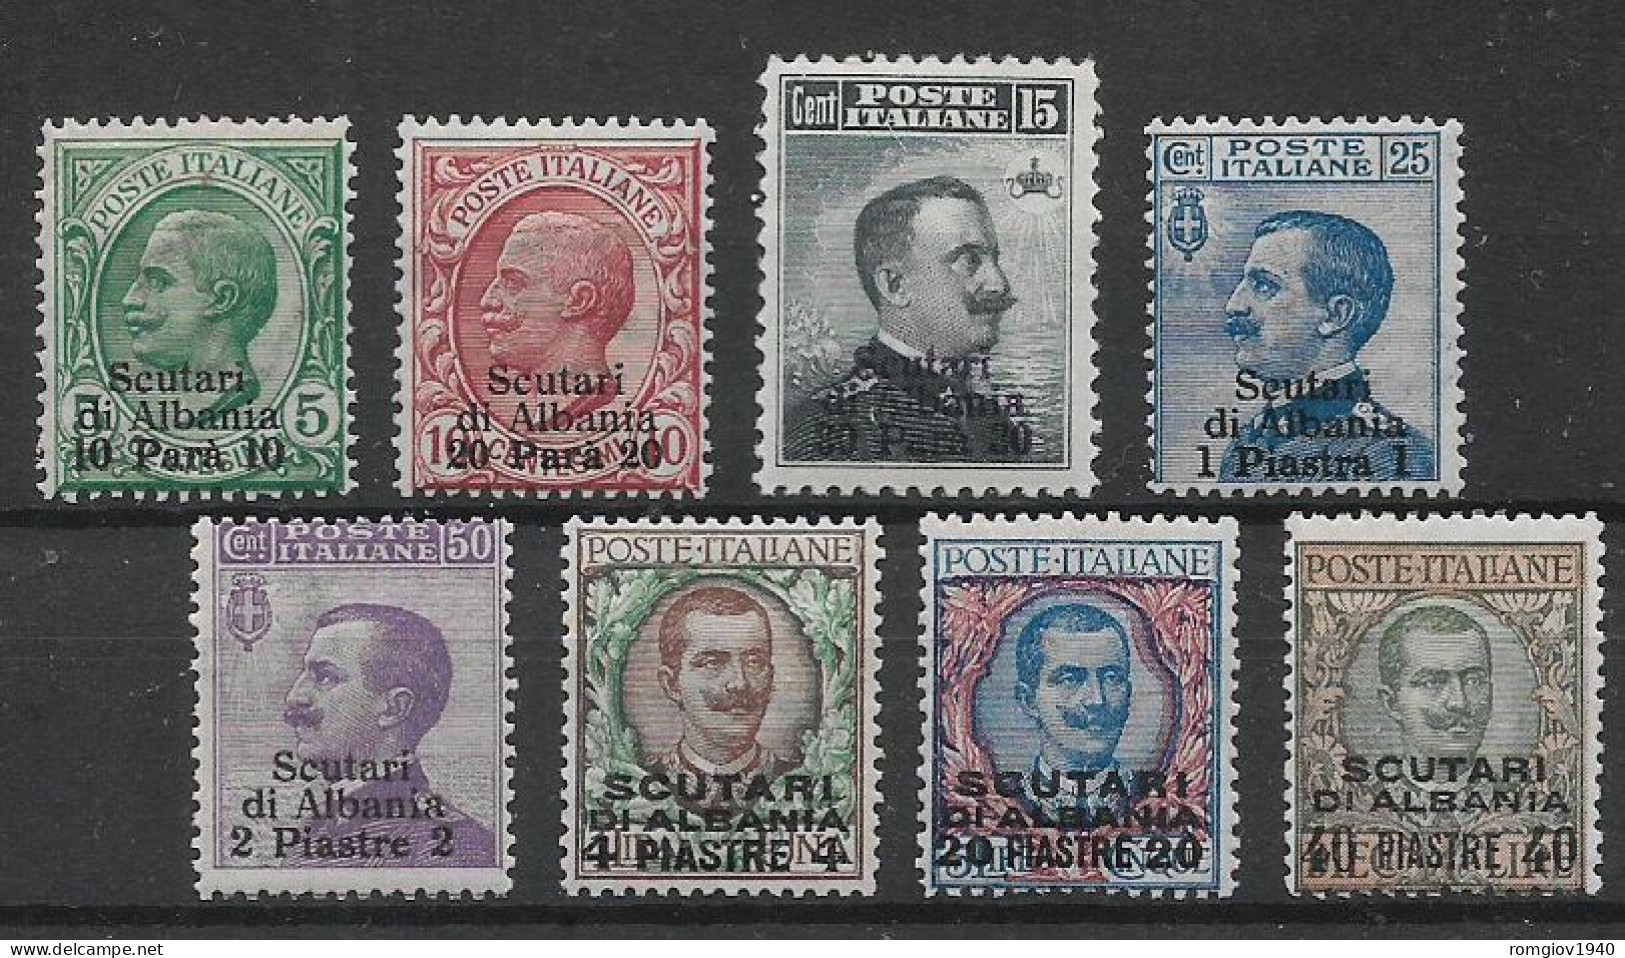 REGNO D'ITALIA LEVANTE  1909-1911 SCUTARI D'ALBANIA FRANCOBOLLI SOPRASTAMPATI SASS. 1-8 MLH  XF++++++ - Oficinas Europeas Y Asiáticas